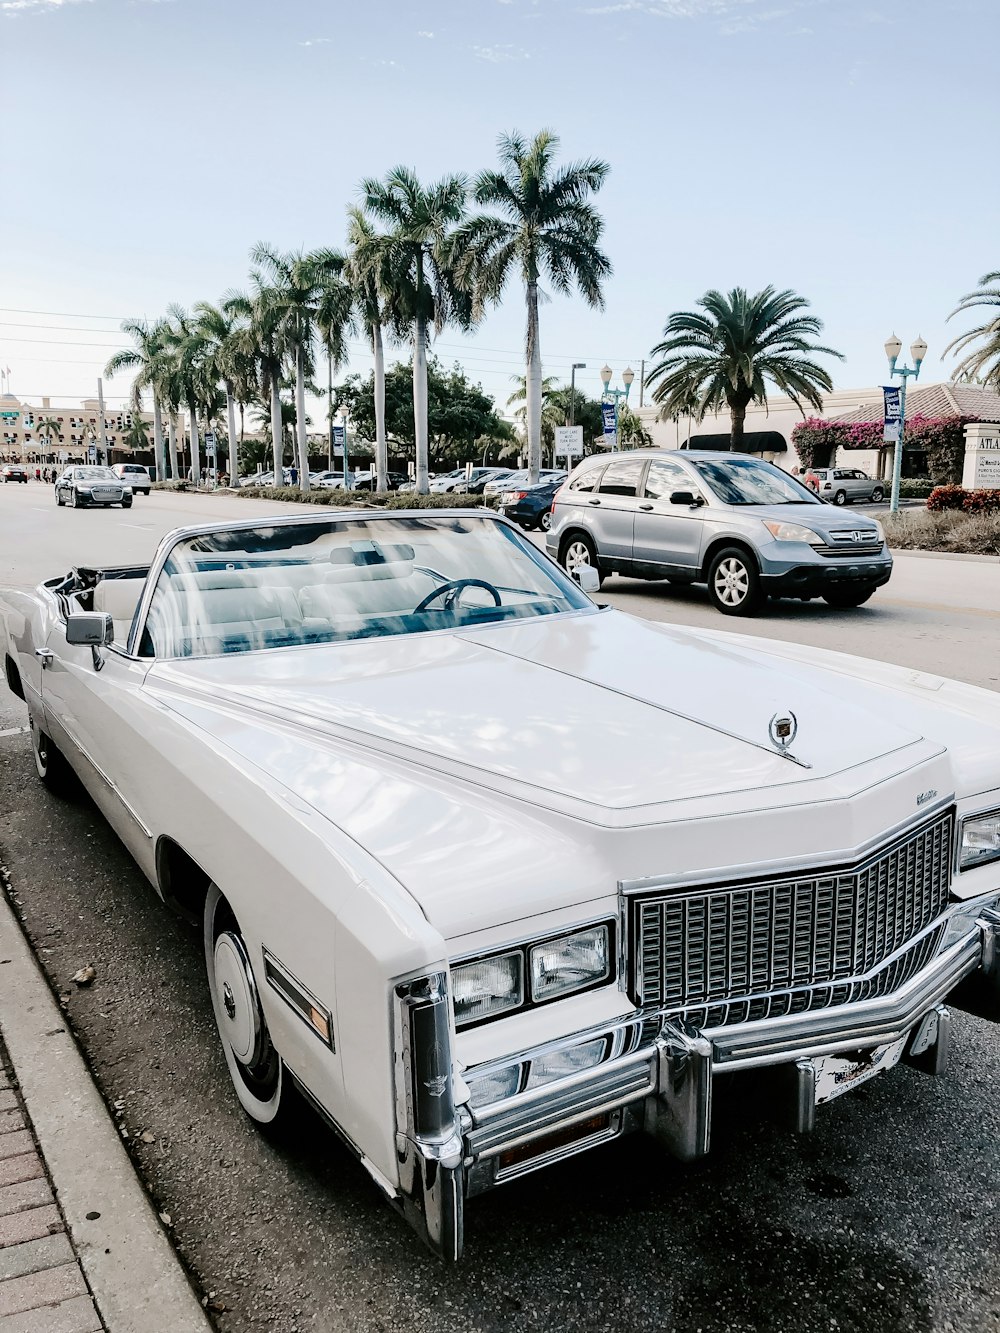 white Cadillac El Dorado parked near curb during daytime